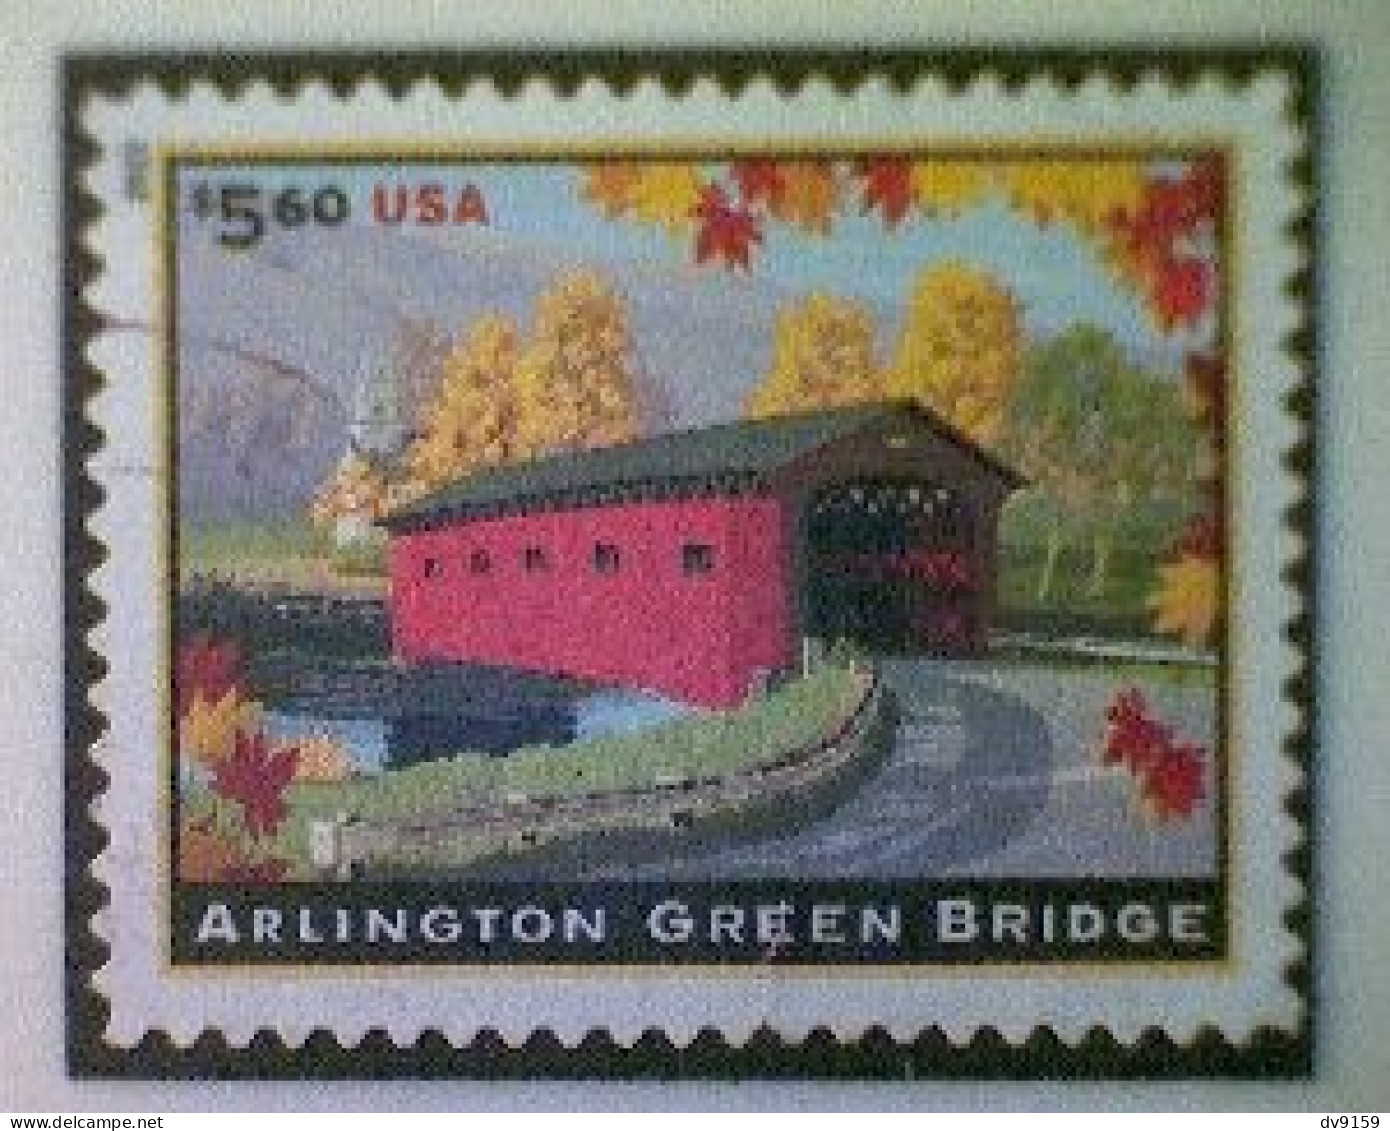 United States, Scott #4738, Used(o), 2013, Arlington Green Bridge, $5.60, Multicolored - Used Stamps